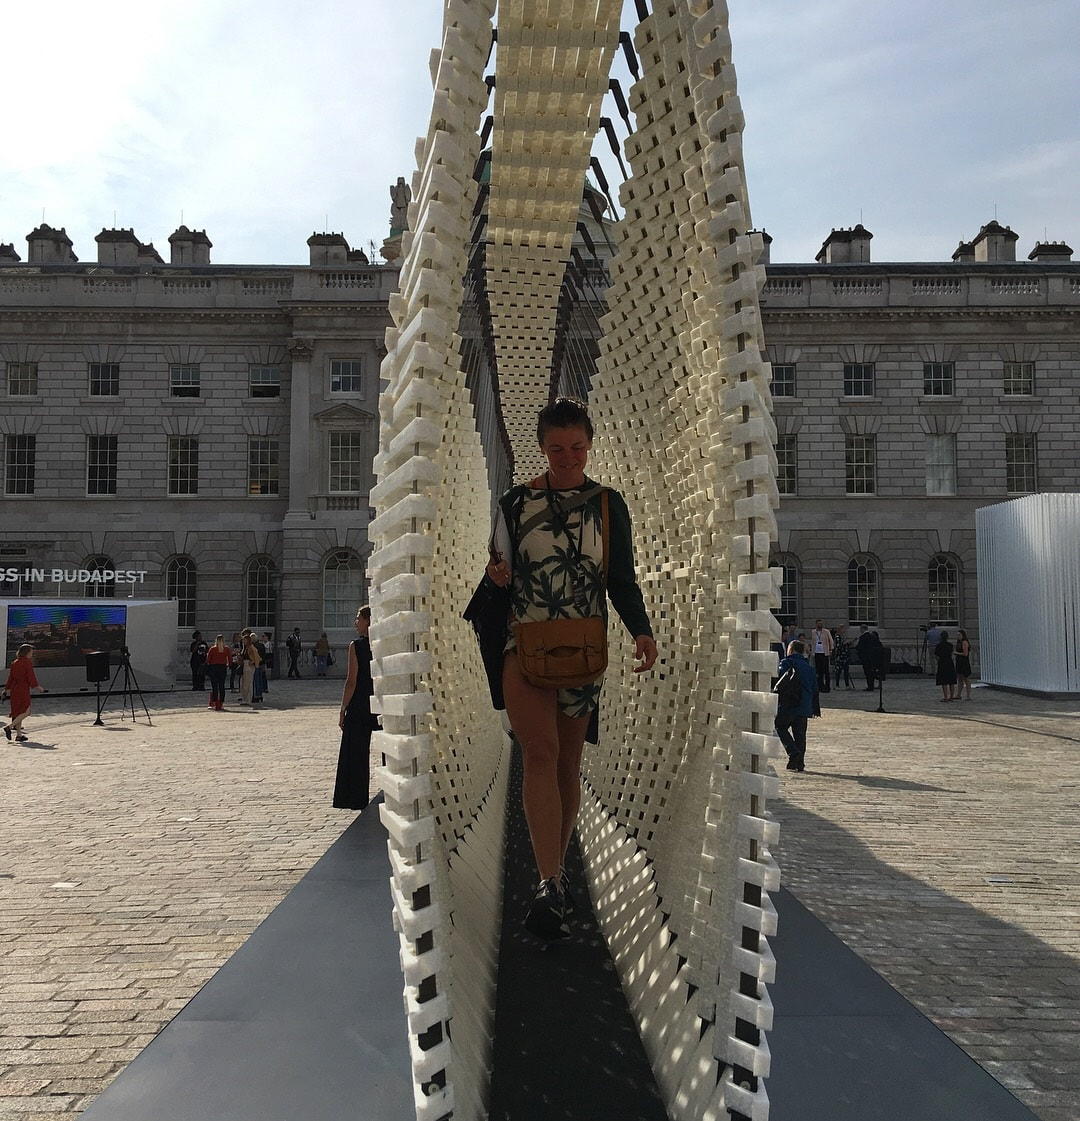 London Design Biennale 2018 at Somerset House Destination Delicious art review